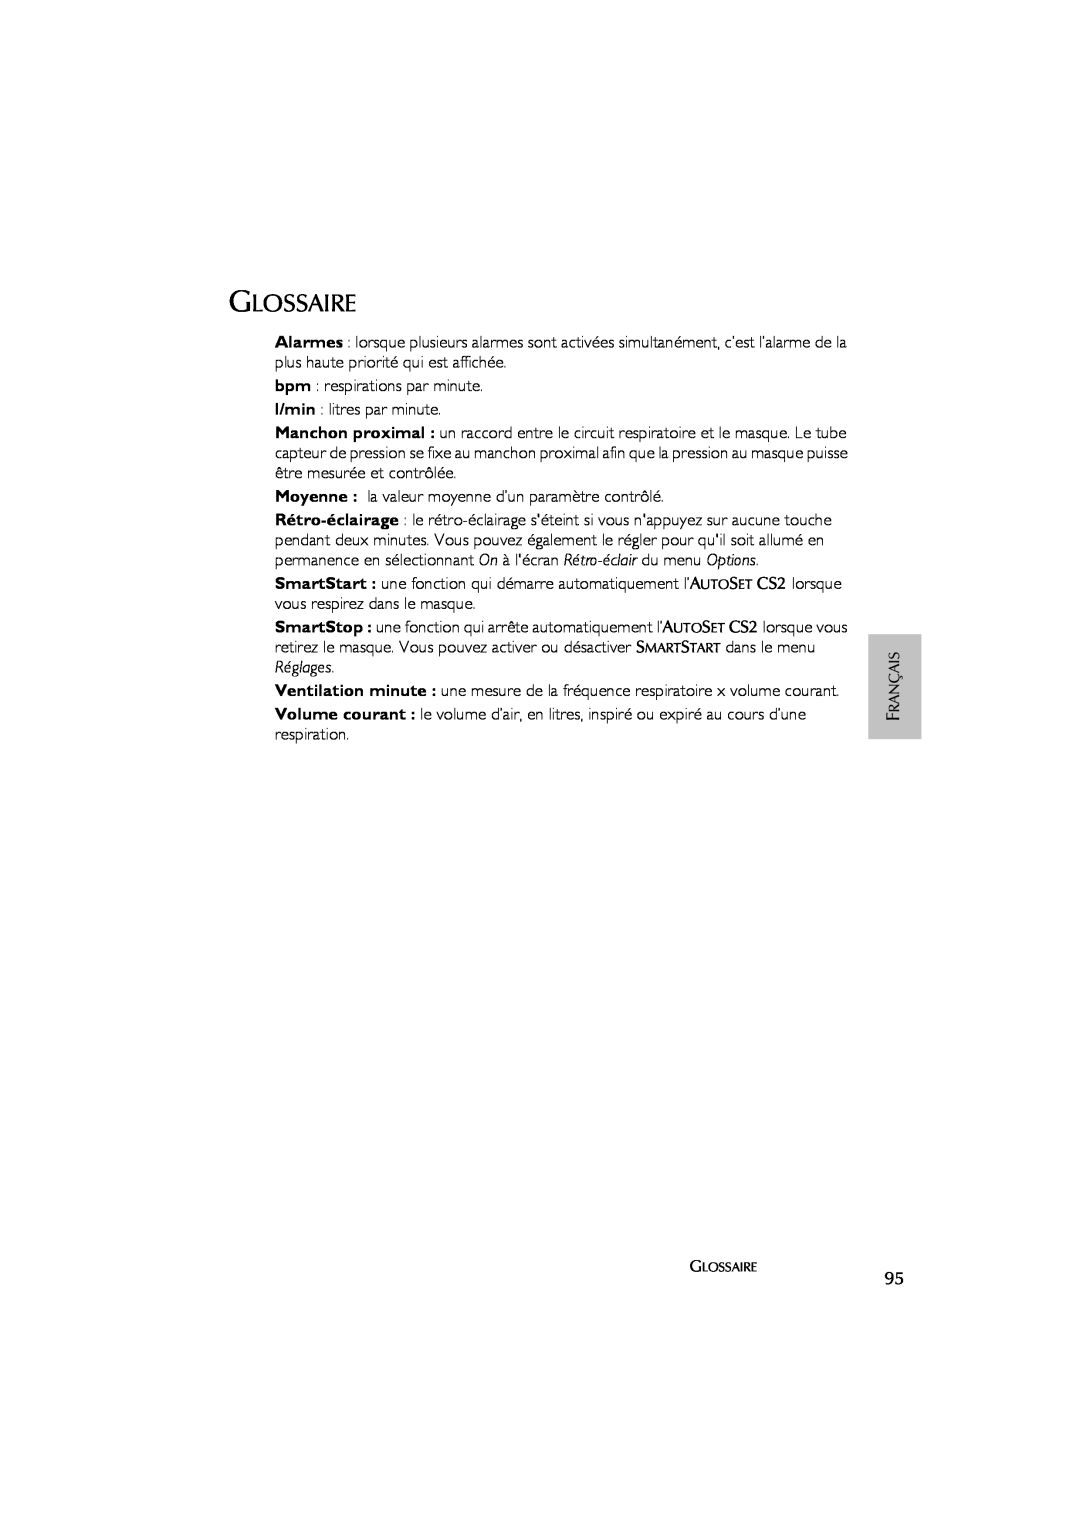 ResMed AutoSet CS 2 user manual Glossaire 